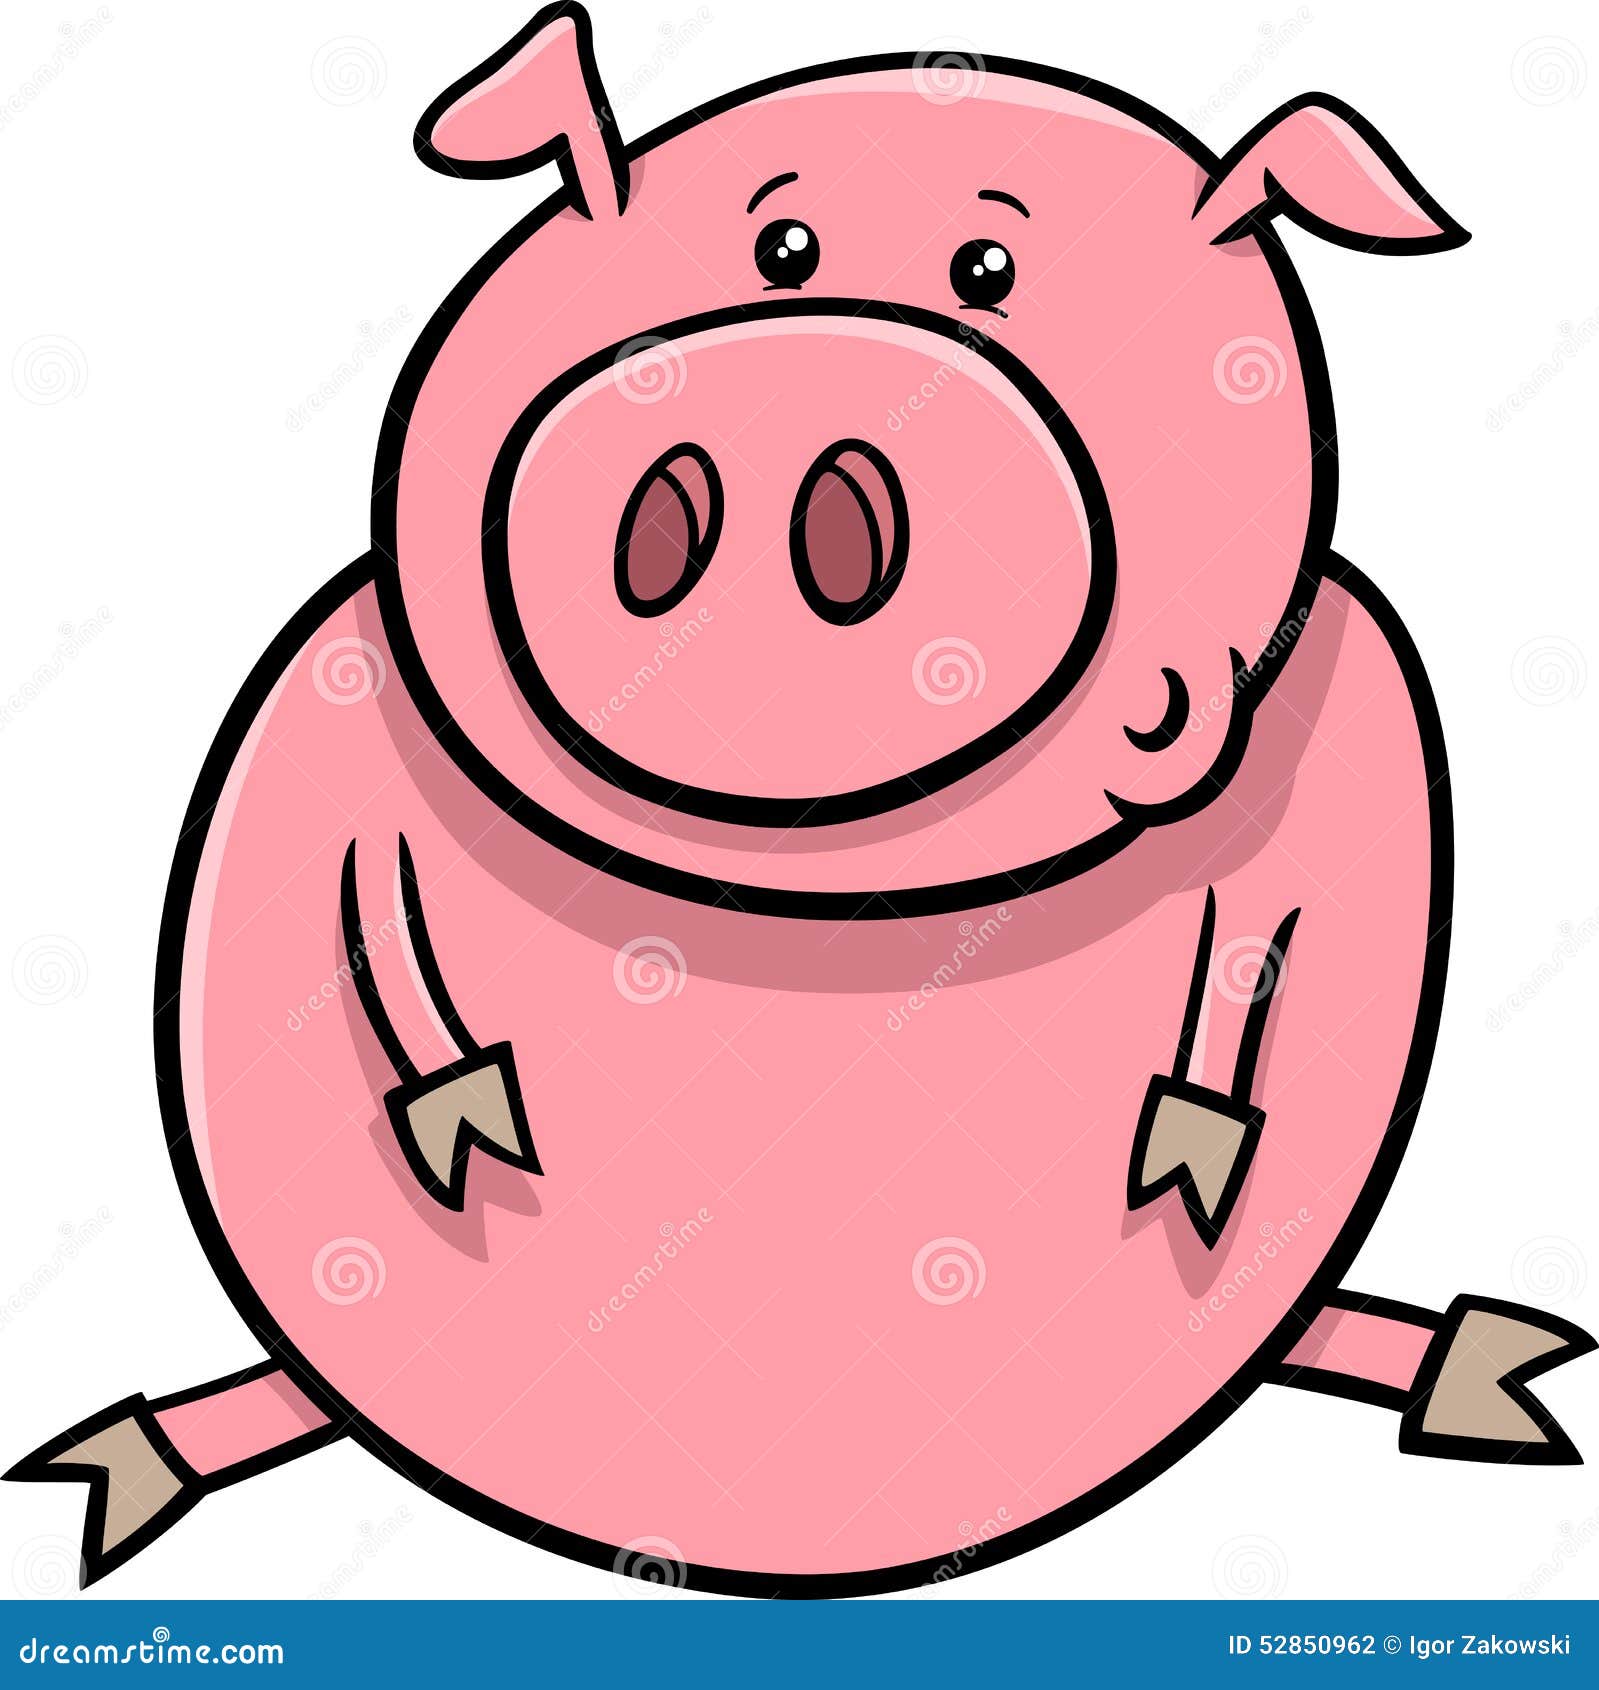 Little Pig Or Piglet Cartoon Stock Vector - Image: 52850962